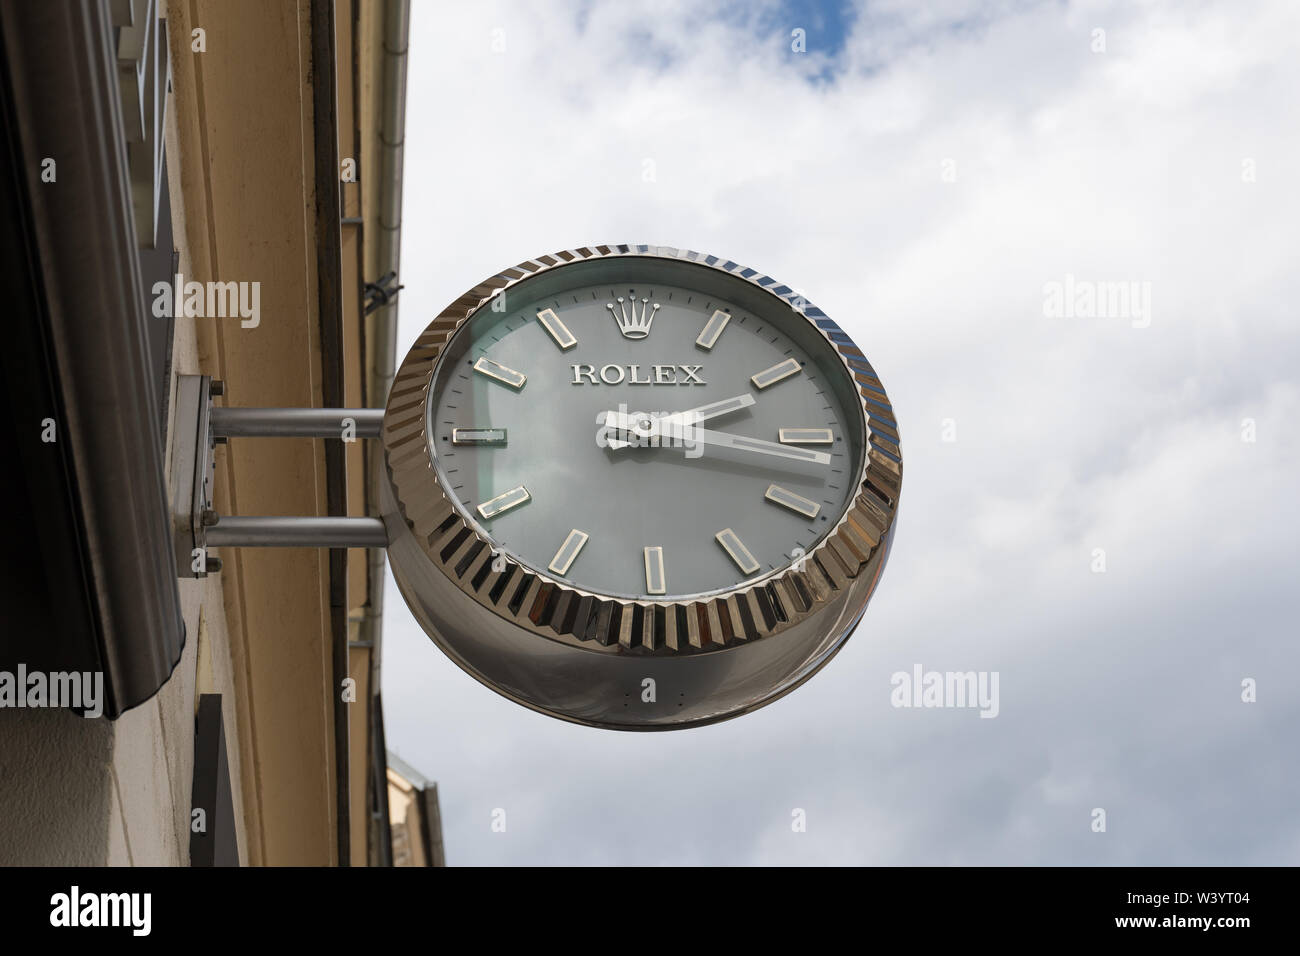 Rolex watch clock outside jewellery shop Stock Photo